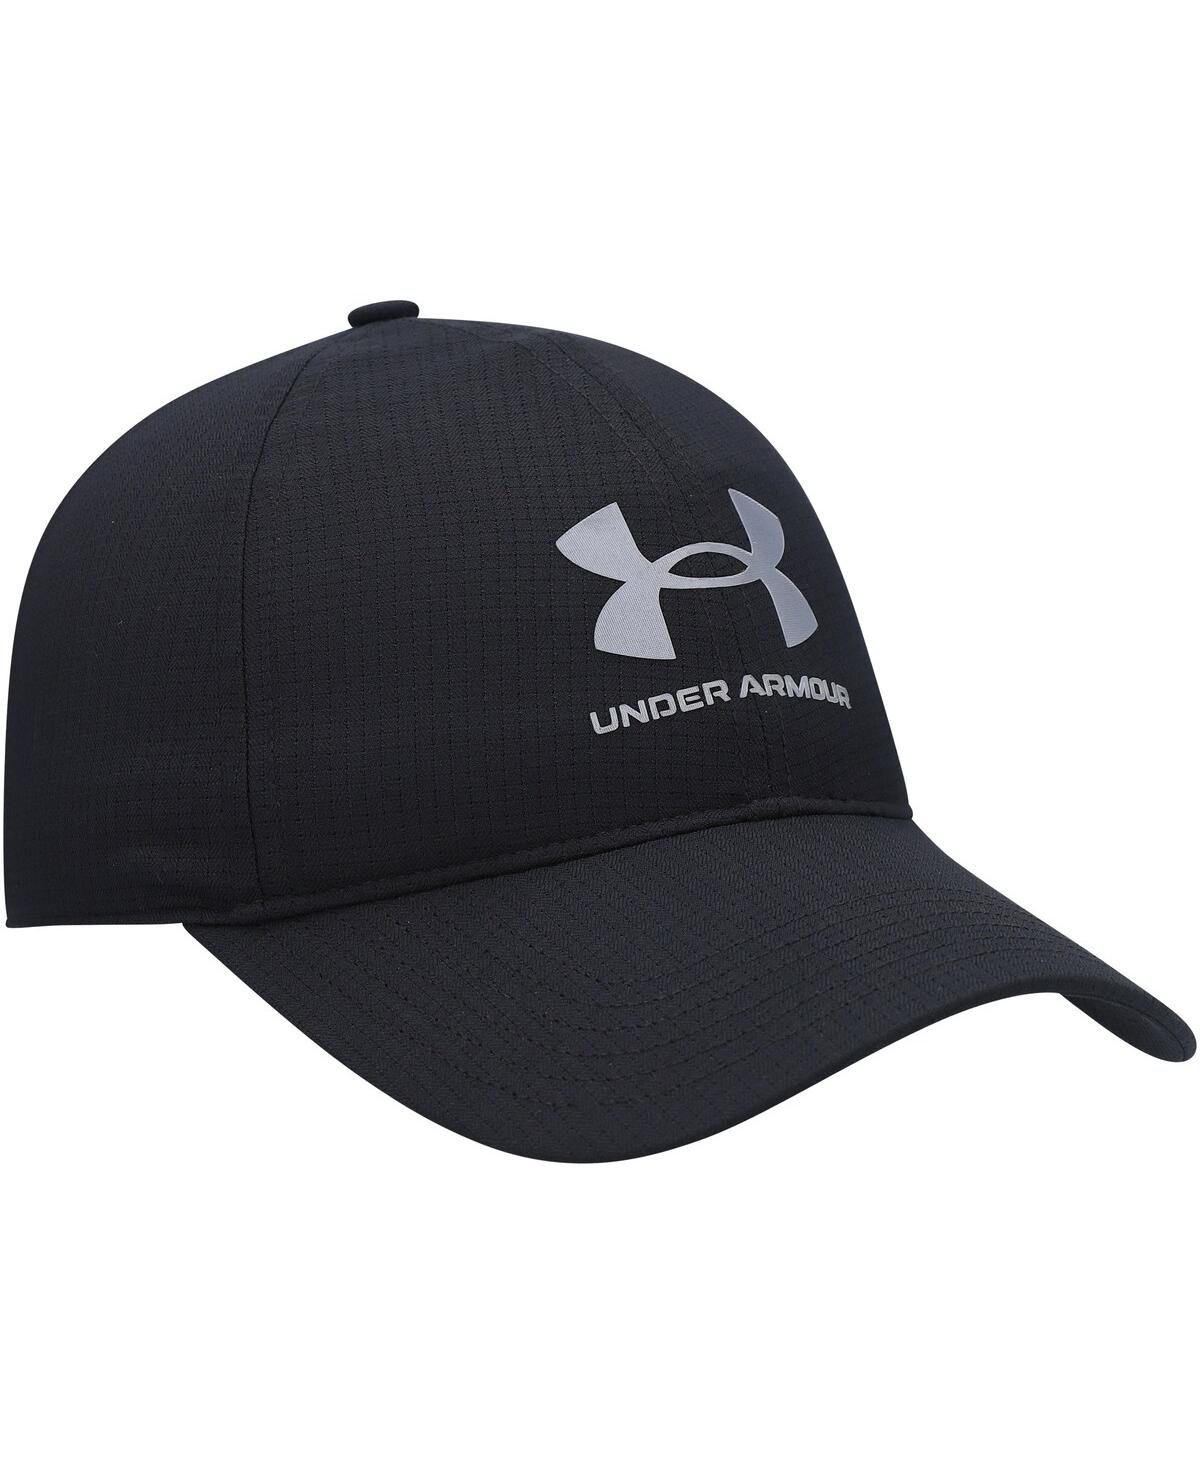 Shop Under Armour Men's  Black Performance Adjustable Hat